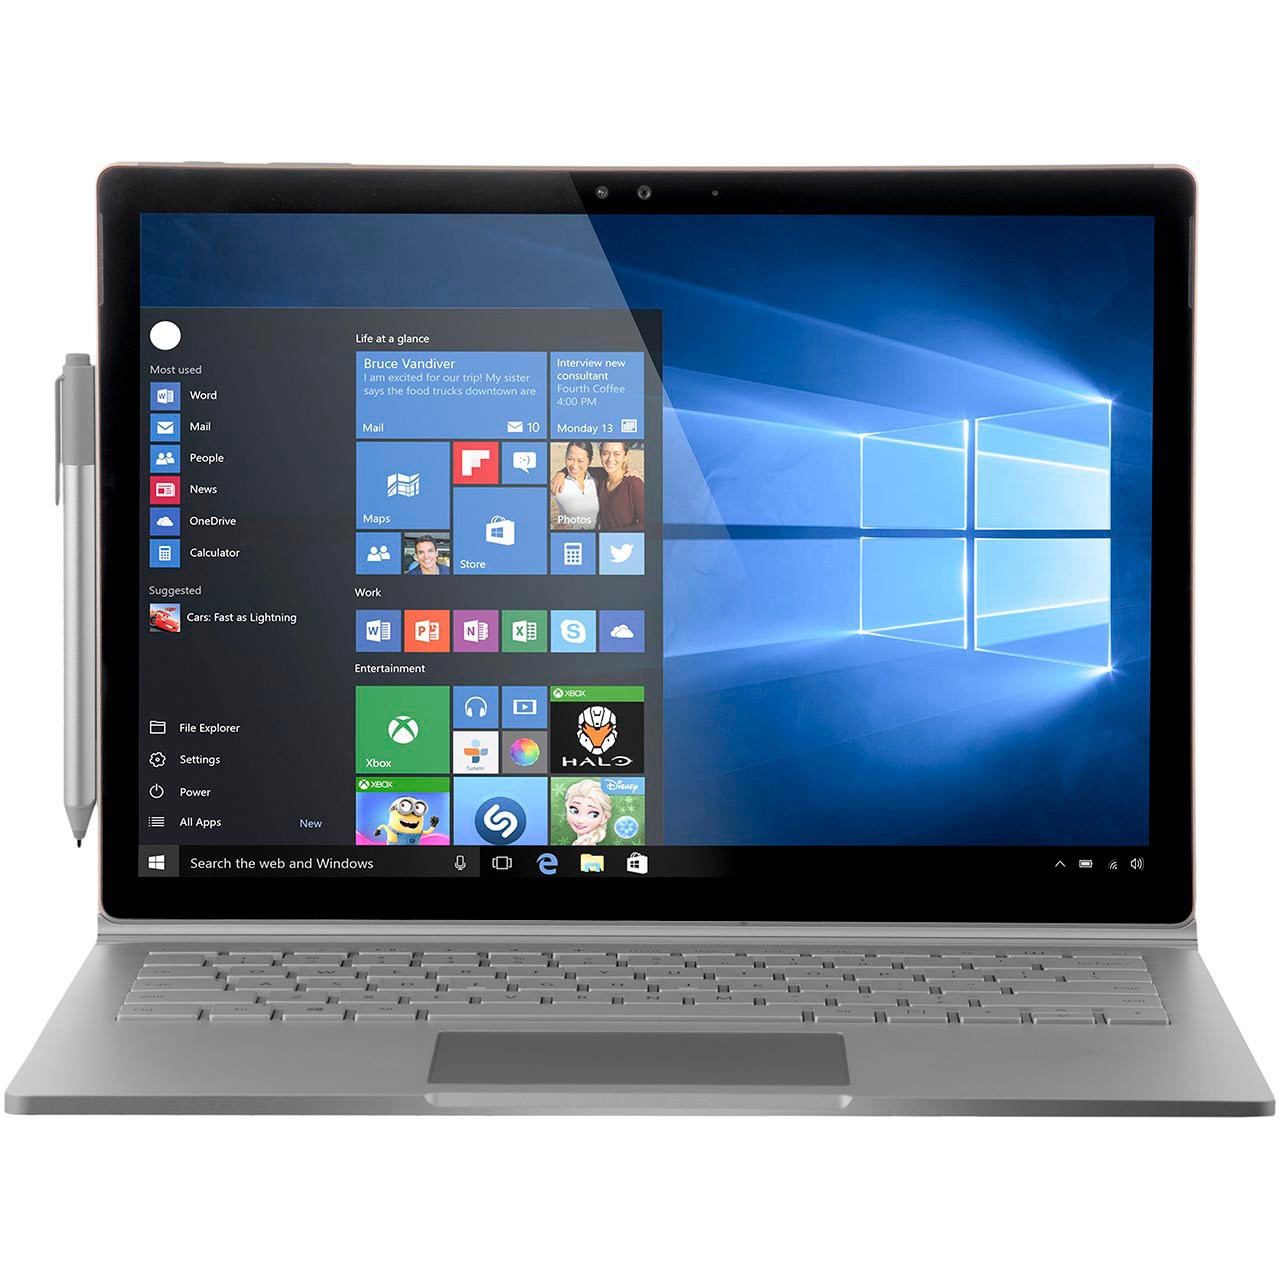 لپ تاپ 13 اینچی مایکروسافت مدل Surface Book Performance Base - B